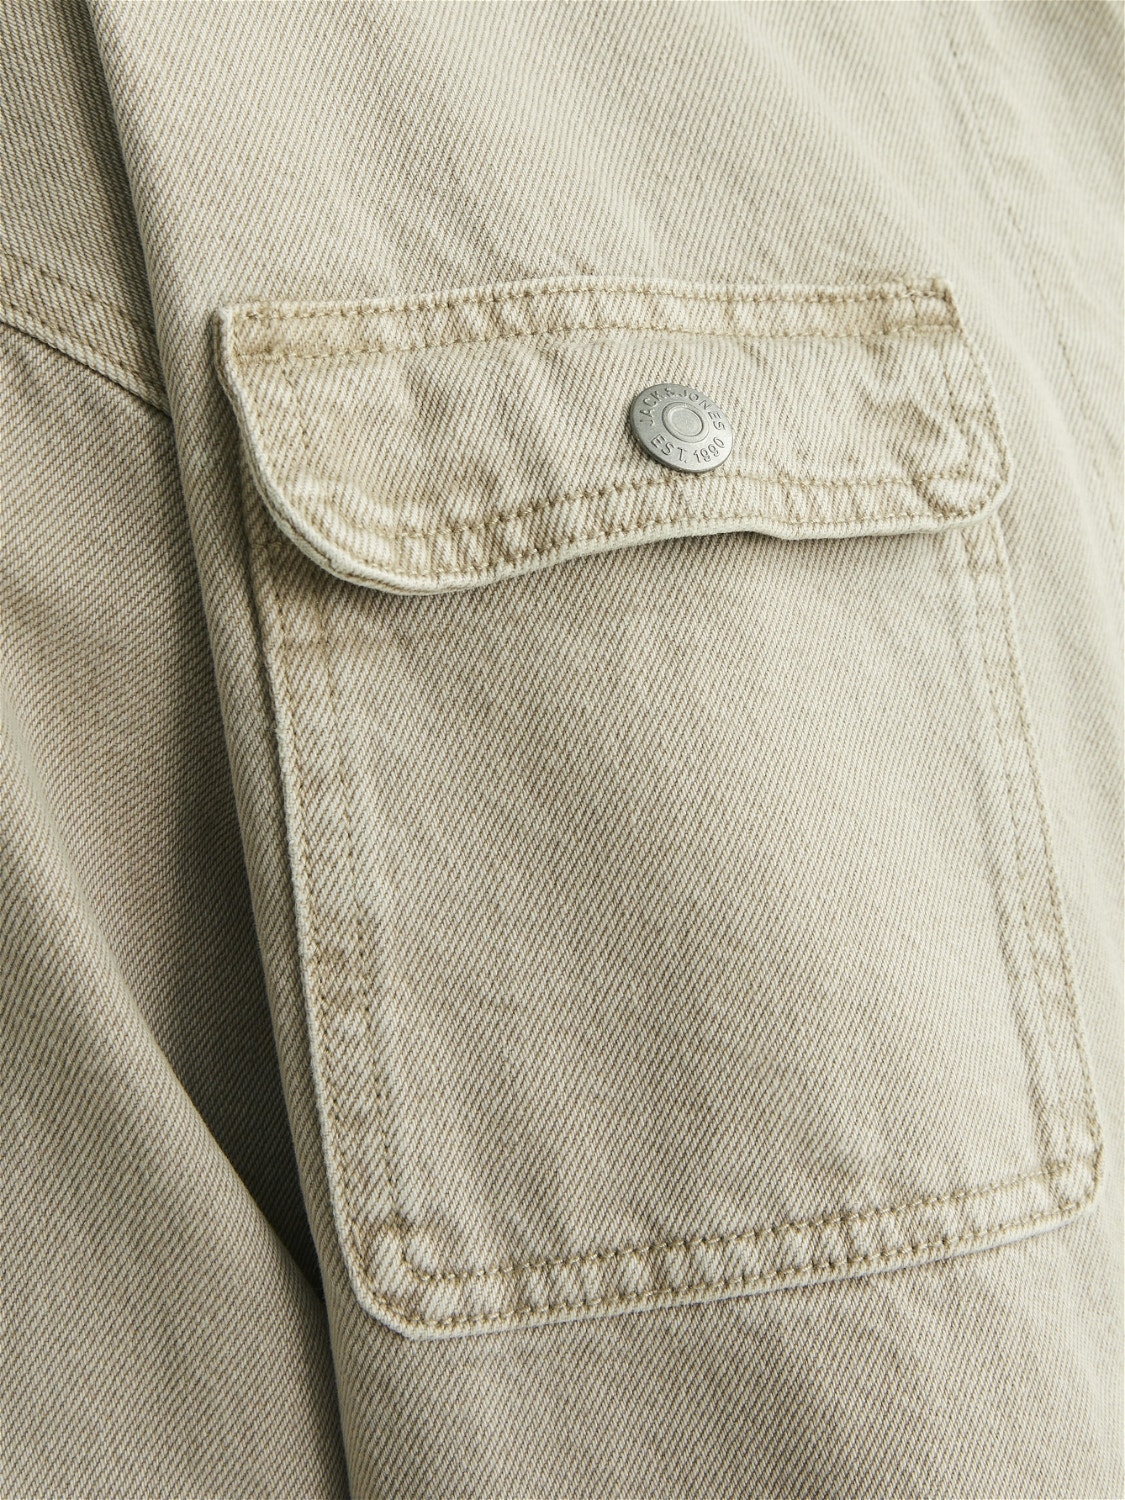 Jack & Jones Loose Fit Shirt -Winter Twig - 12249029